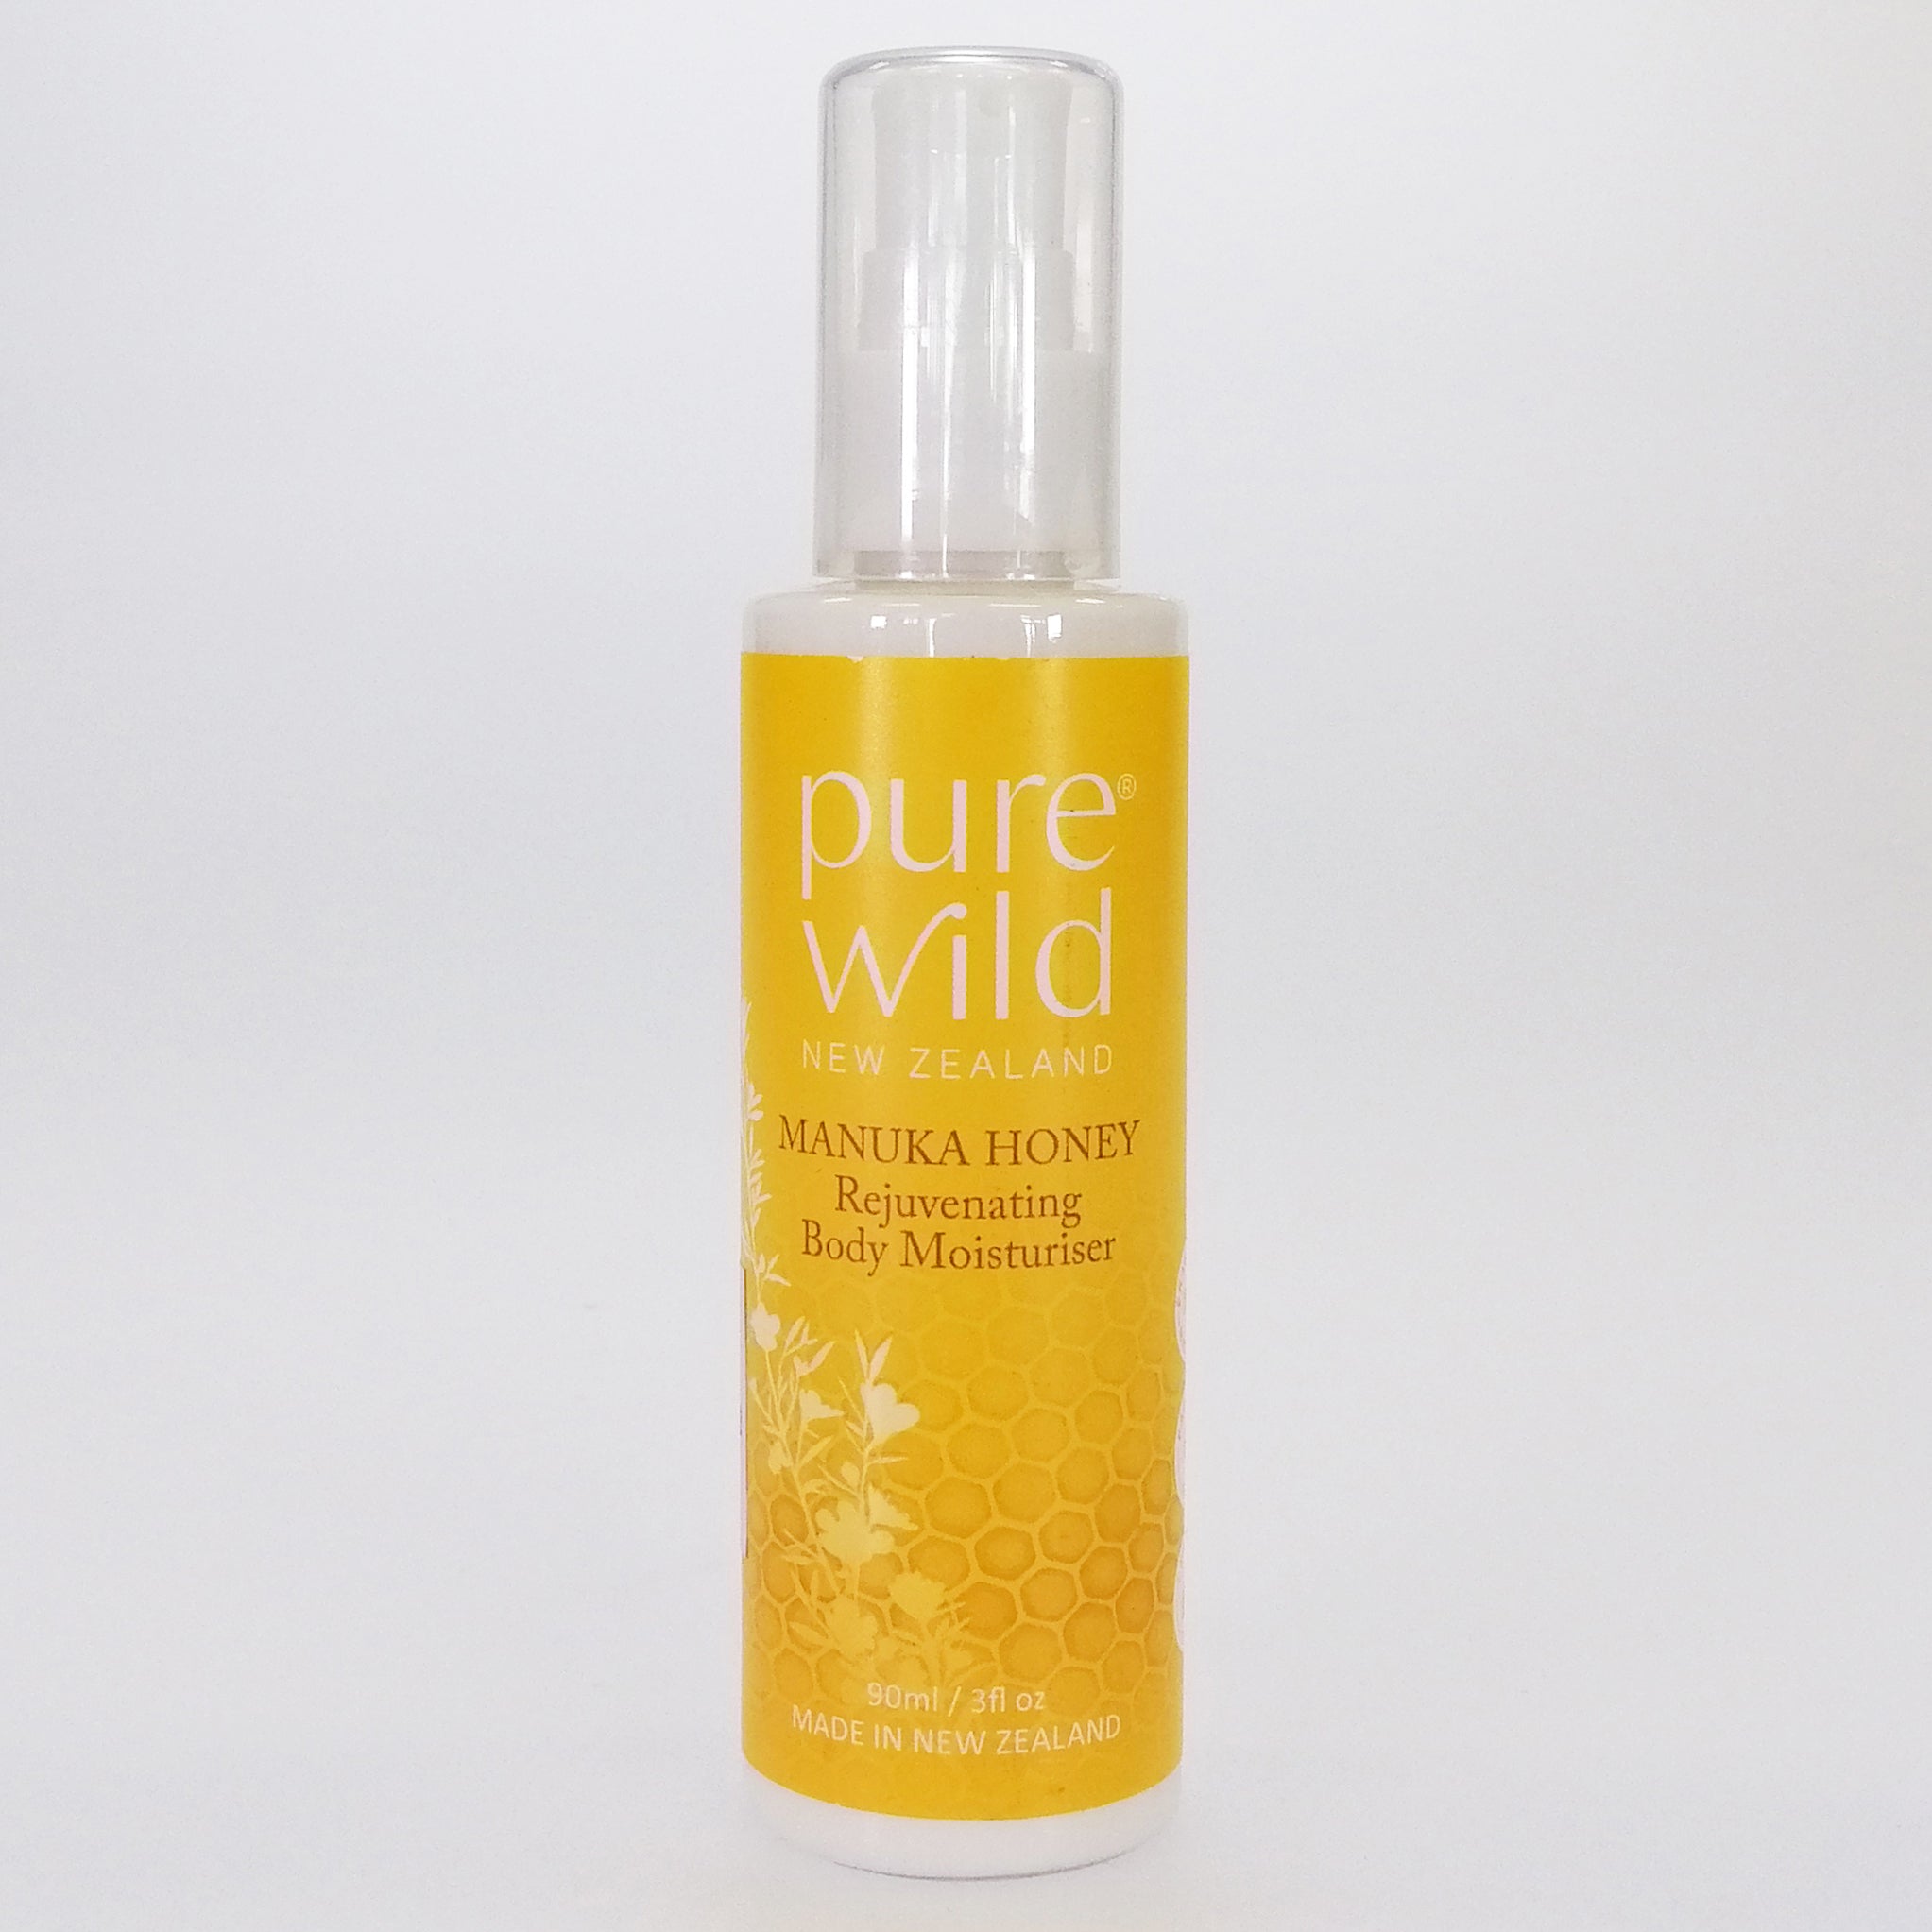 Purewild Rejuvenating Body Moisturiser - Manuka Honey